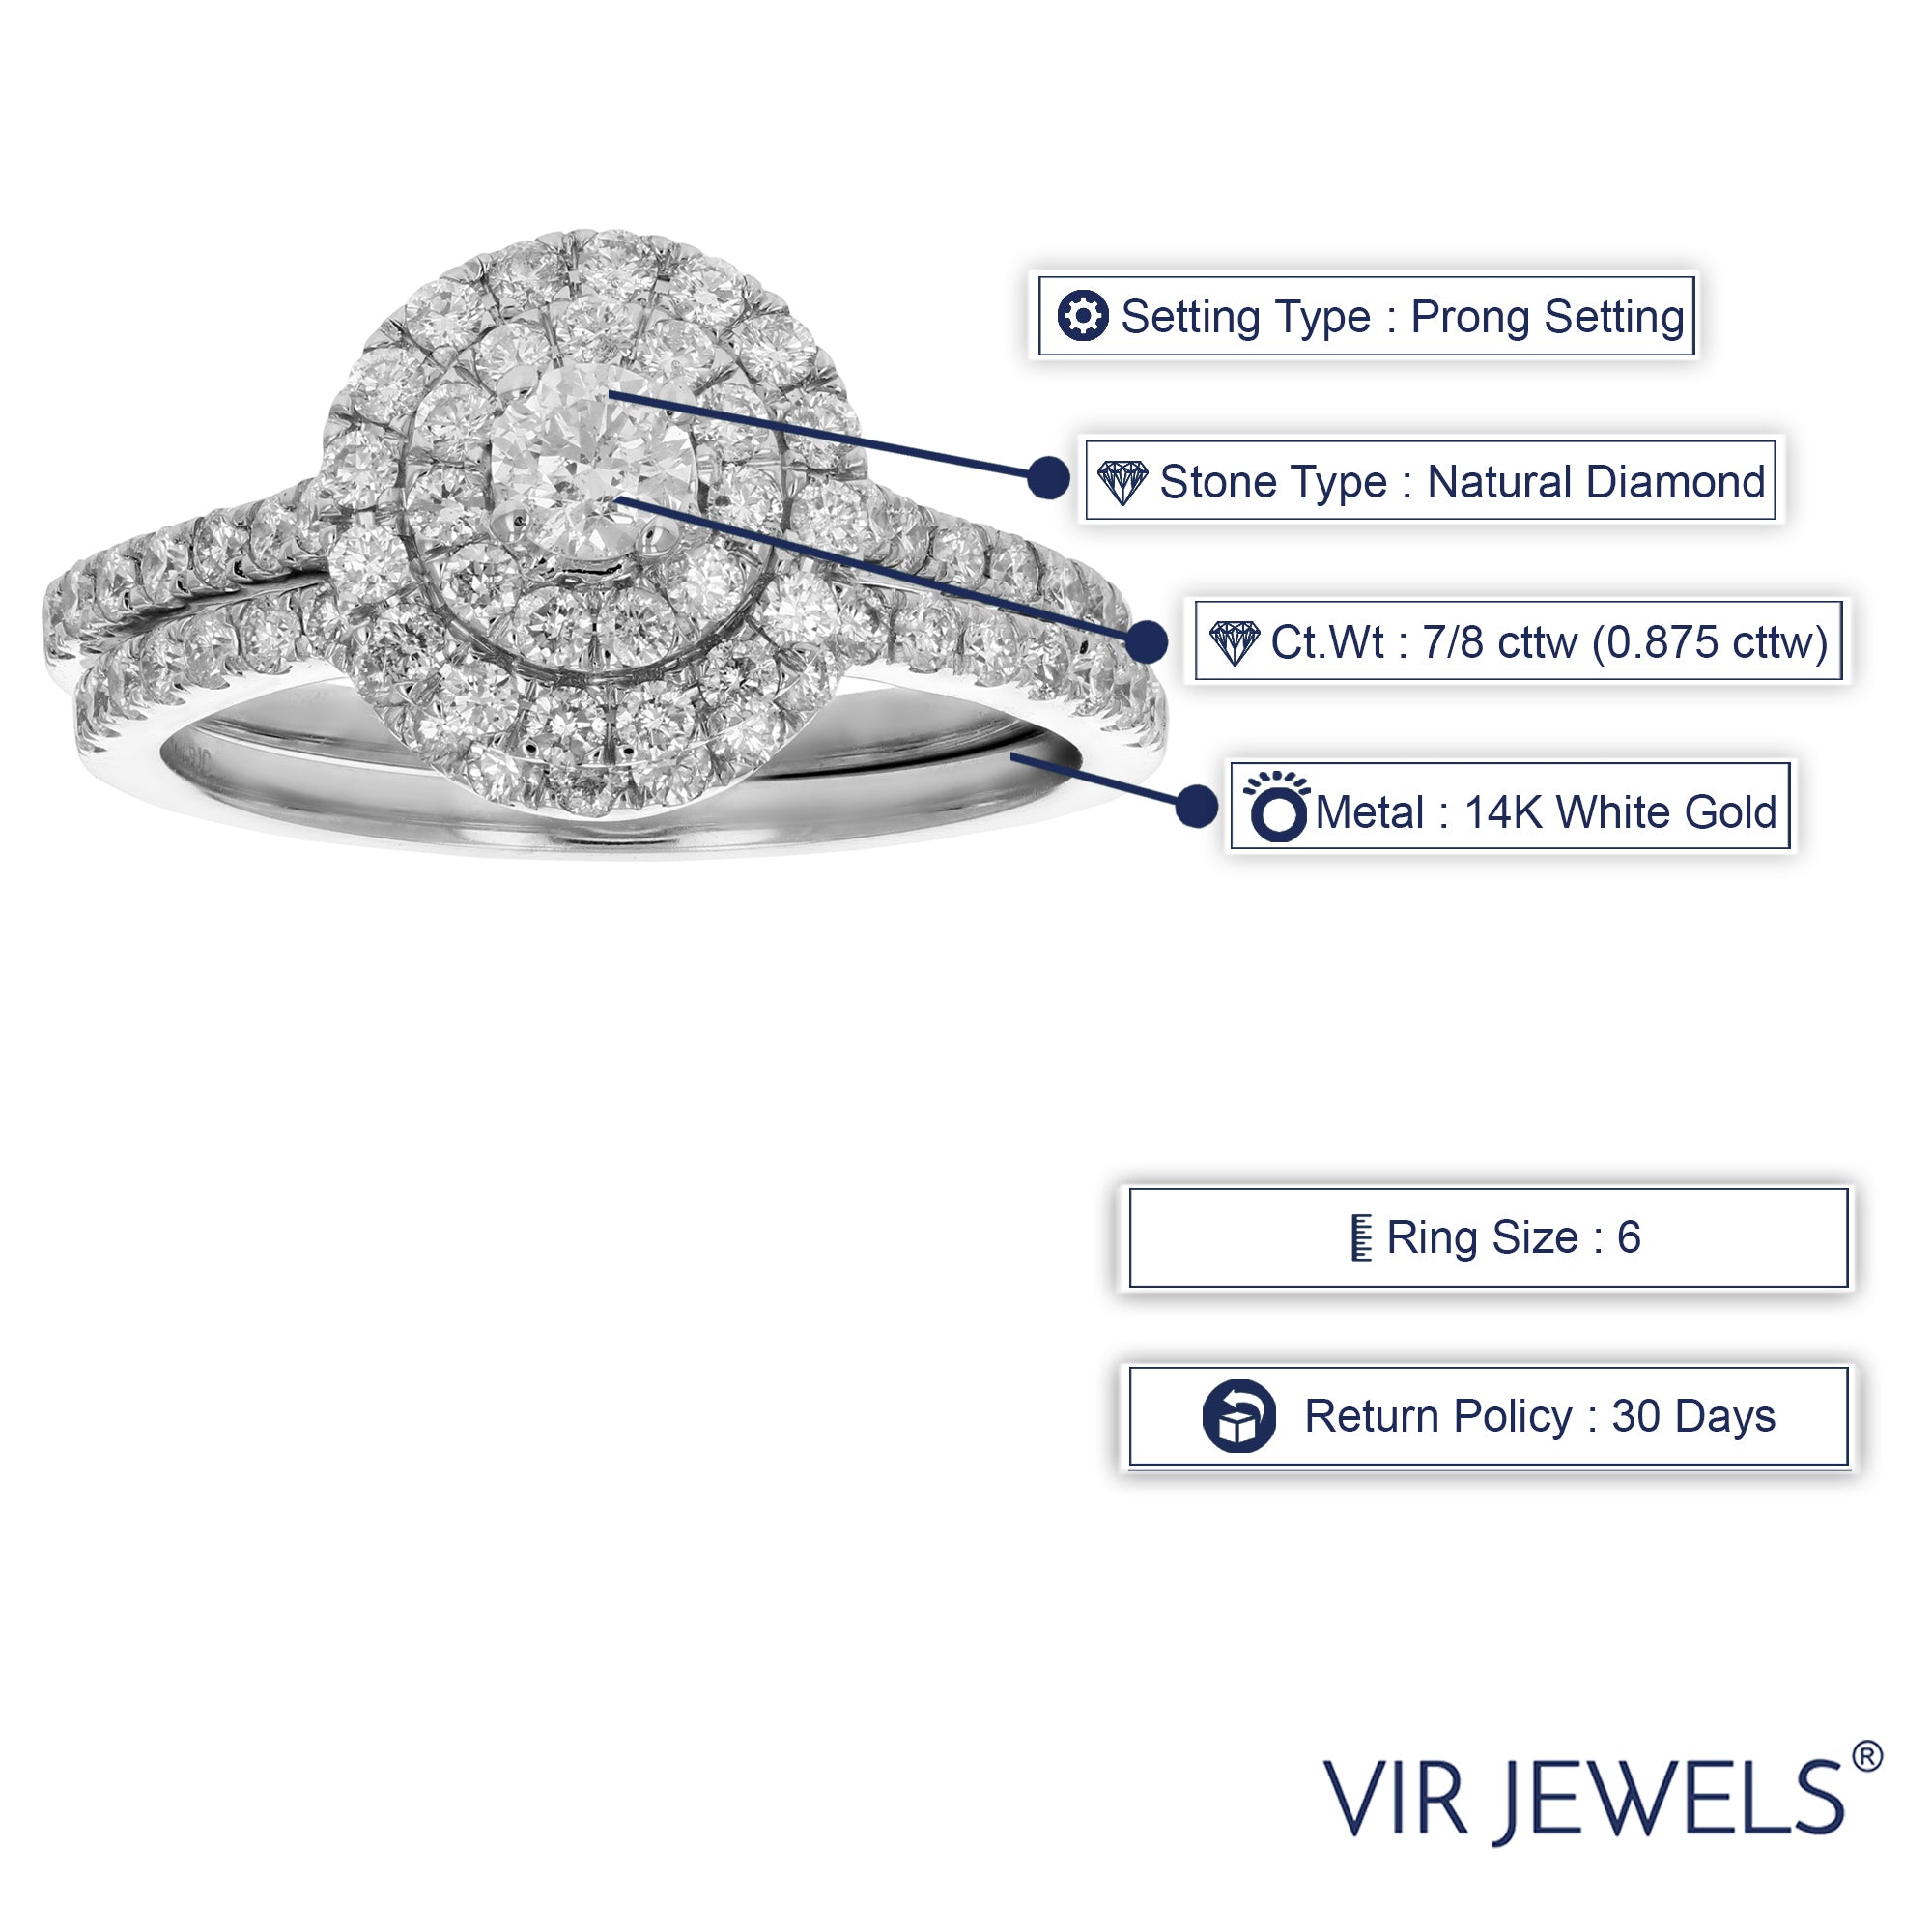 7/8 cttw Diamond Wedding Engagement Ring Set 14K White Gold Round Bridal Style